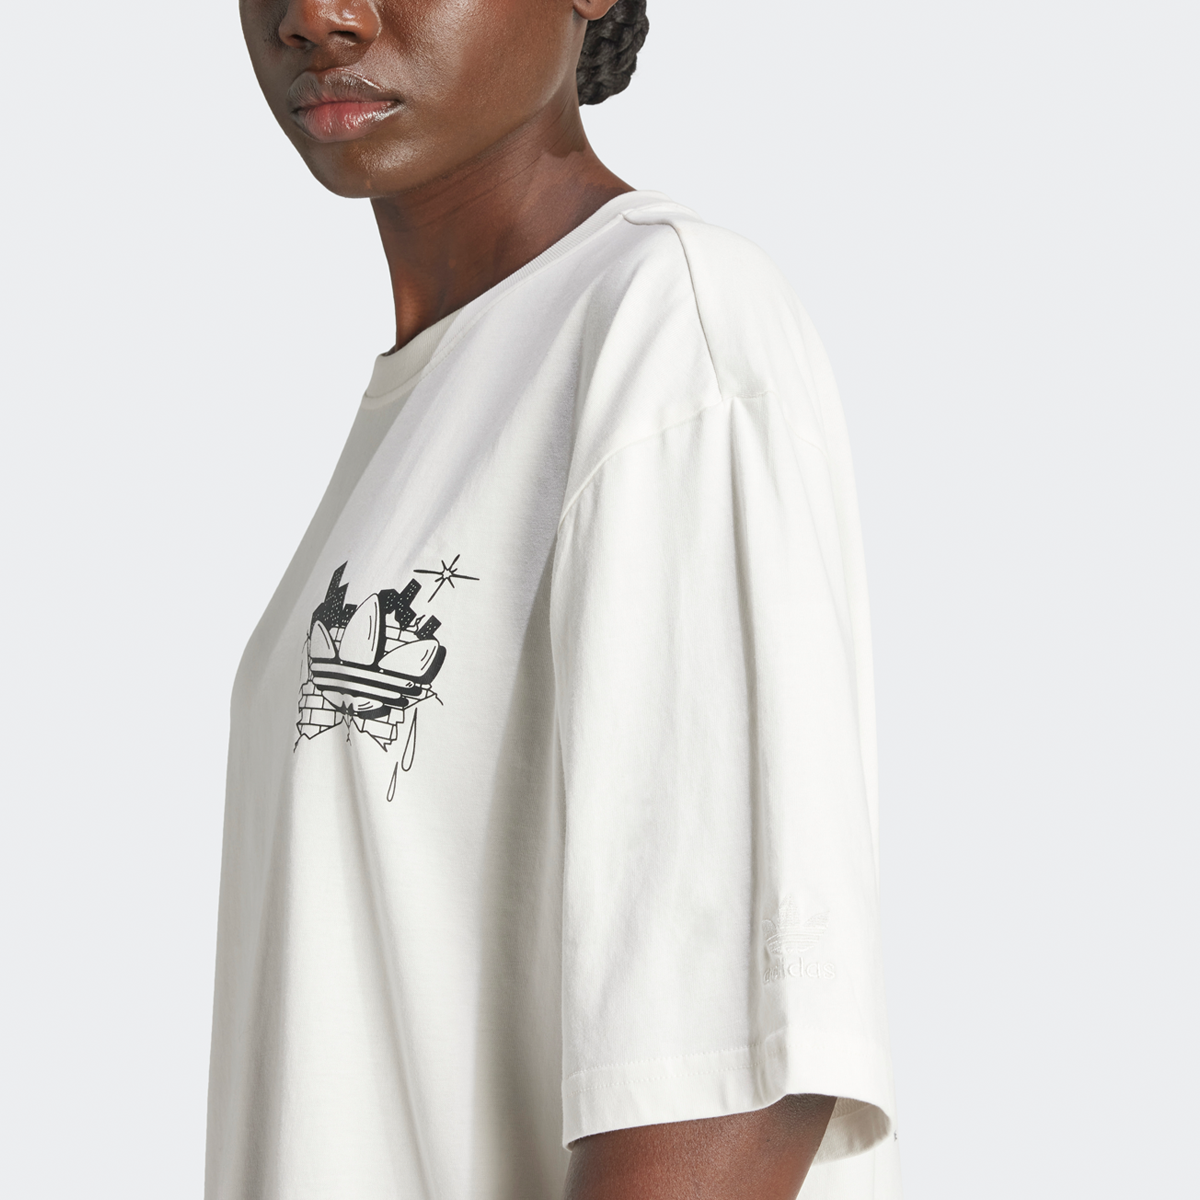 adidas Originals Graffiti Graphic T-shirt T-shirts Dames cloud white maat: M beschikbare maaten:XS S M L